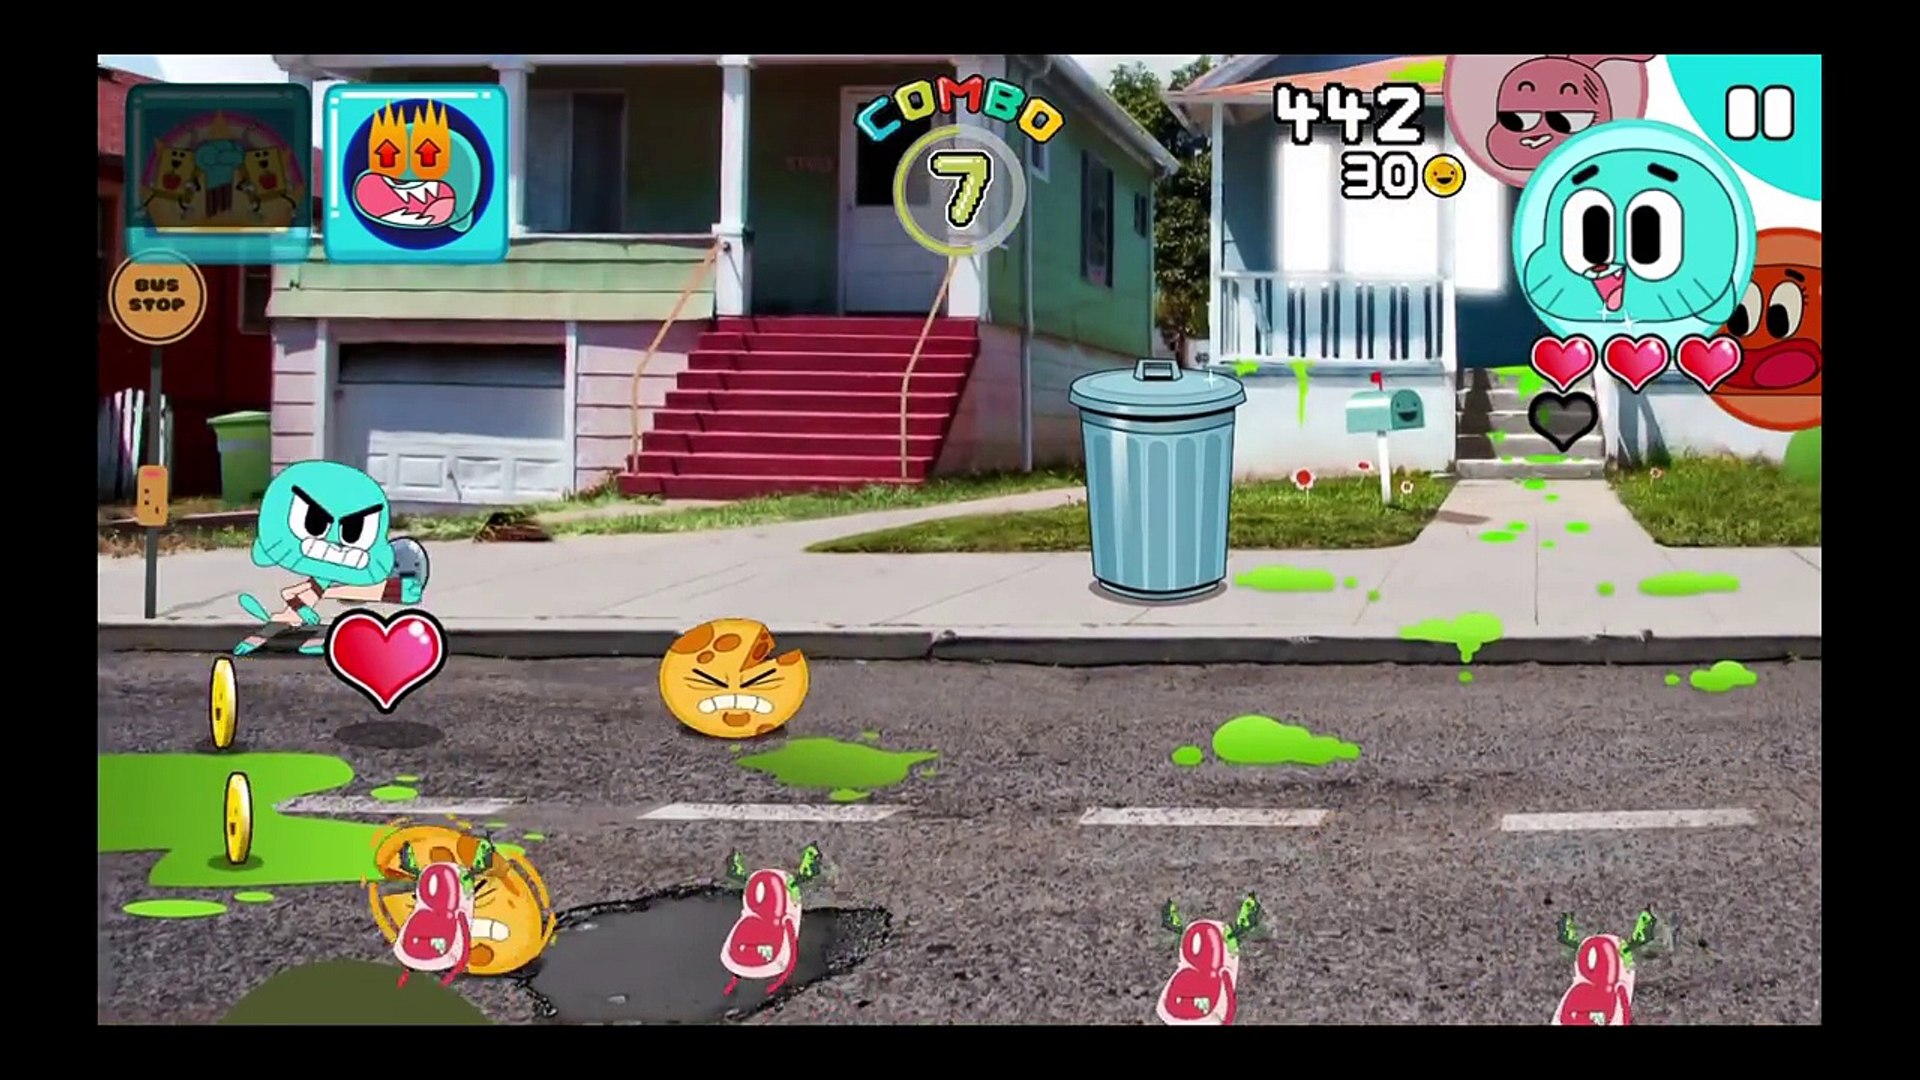 Gumball: Mutant Fridge Mayhem - The Amazing World of Gumball Game App –  Видео Dailymotion